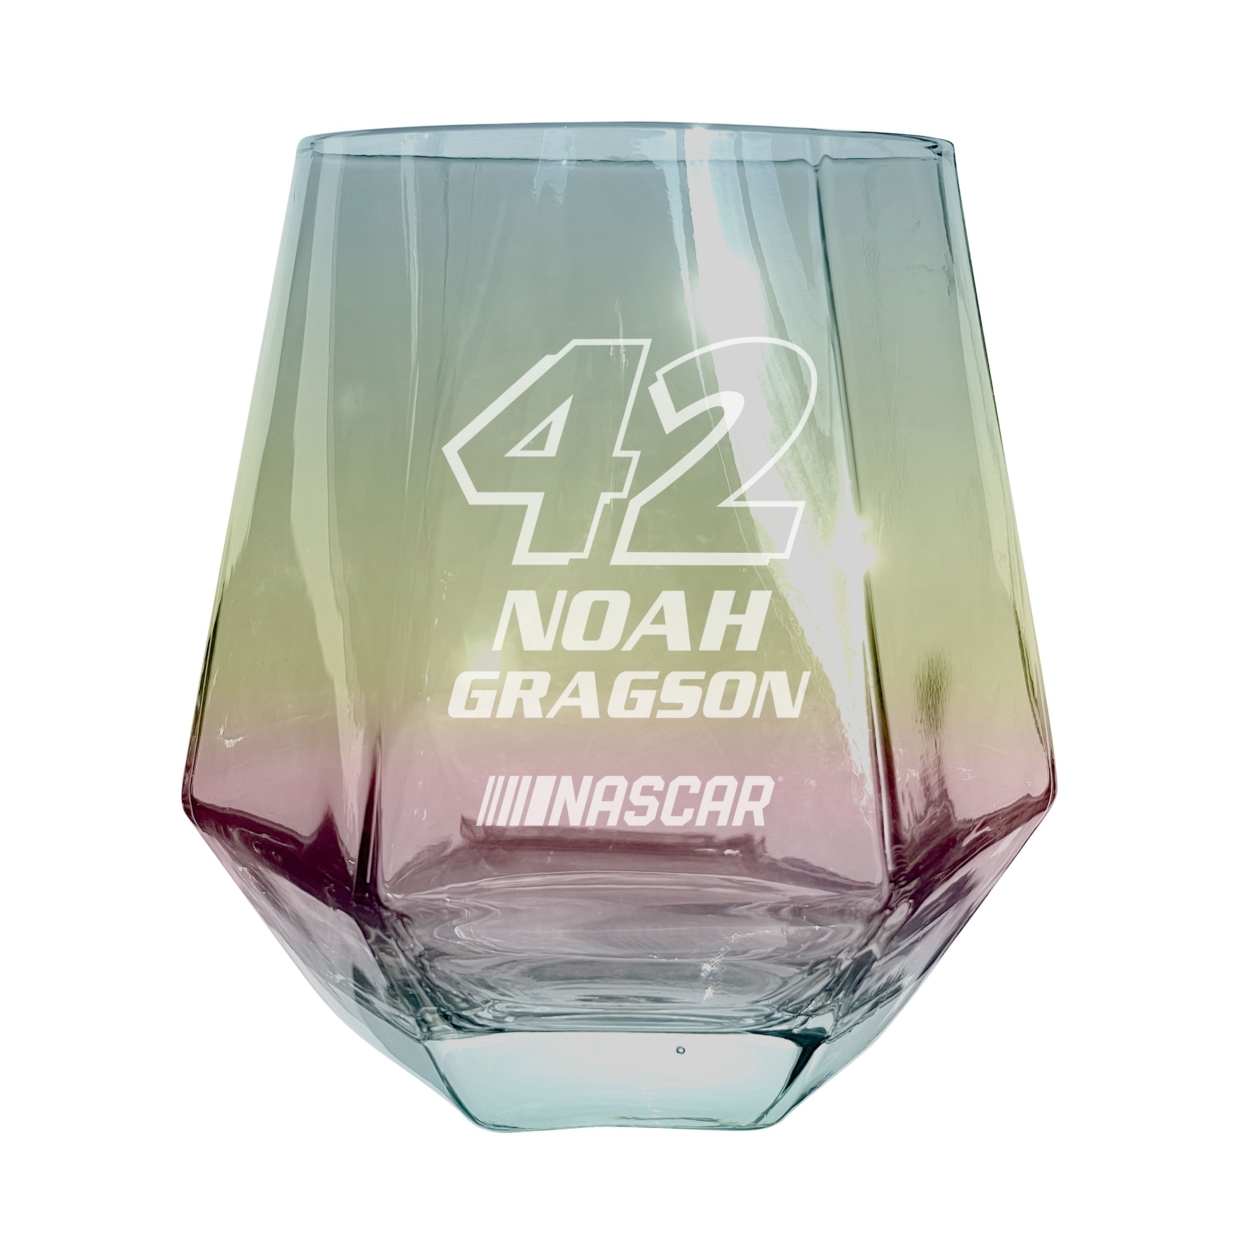 #42 Noah Gragson Officially Licensed 10 Oz Engraved Diamond Wine Glass - Iridescent, Single